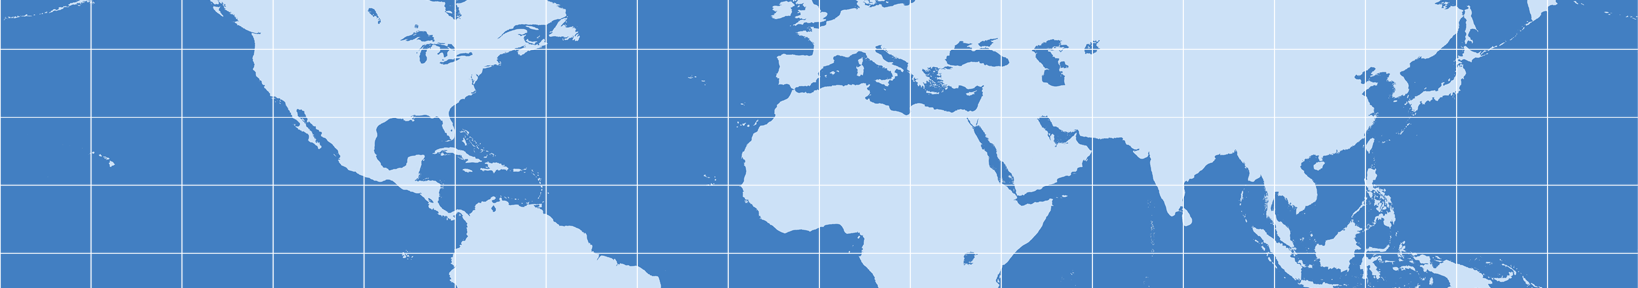 world map in half image